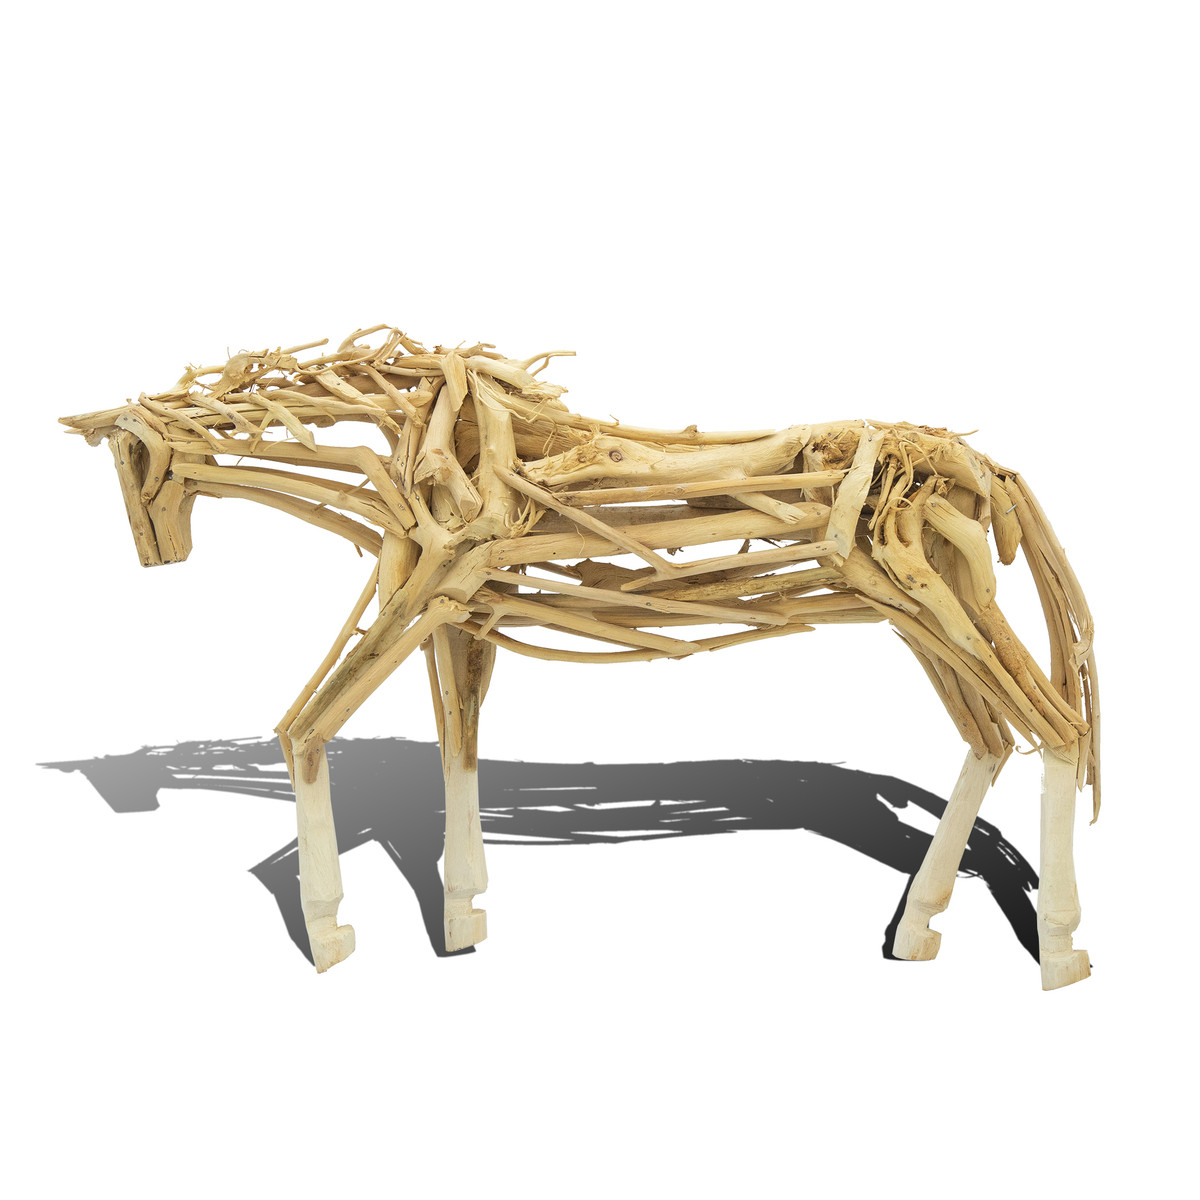 Driftwood Trotting Horse Figure - 18-in x 14-in - Mellow Monkey